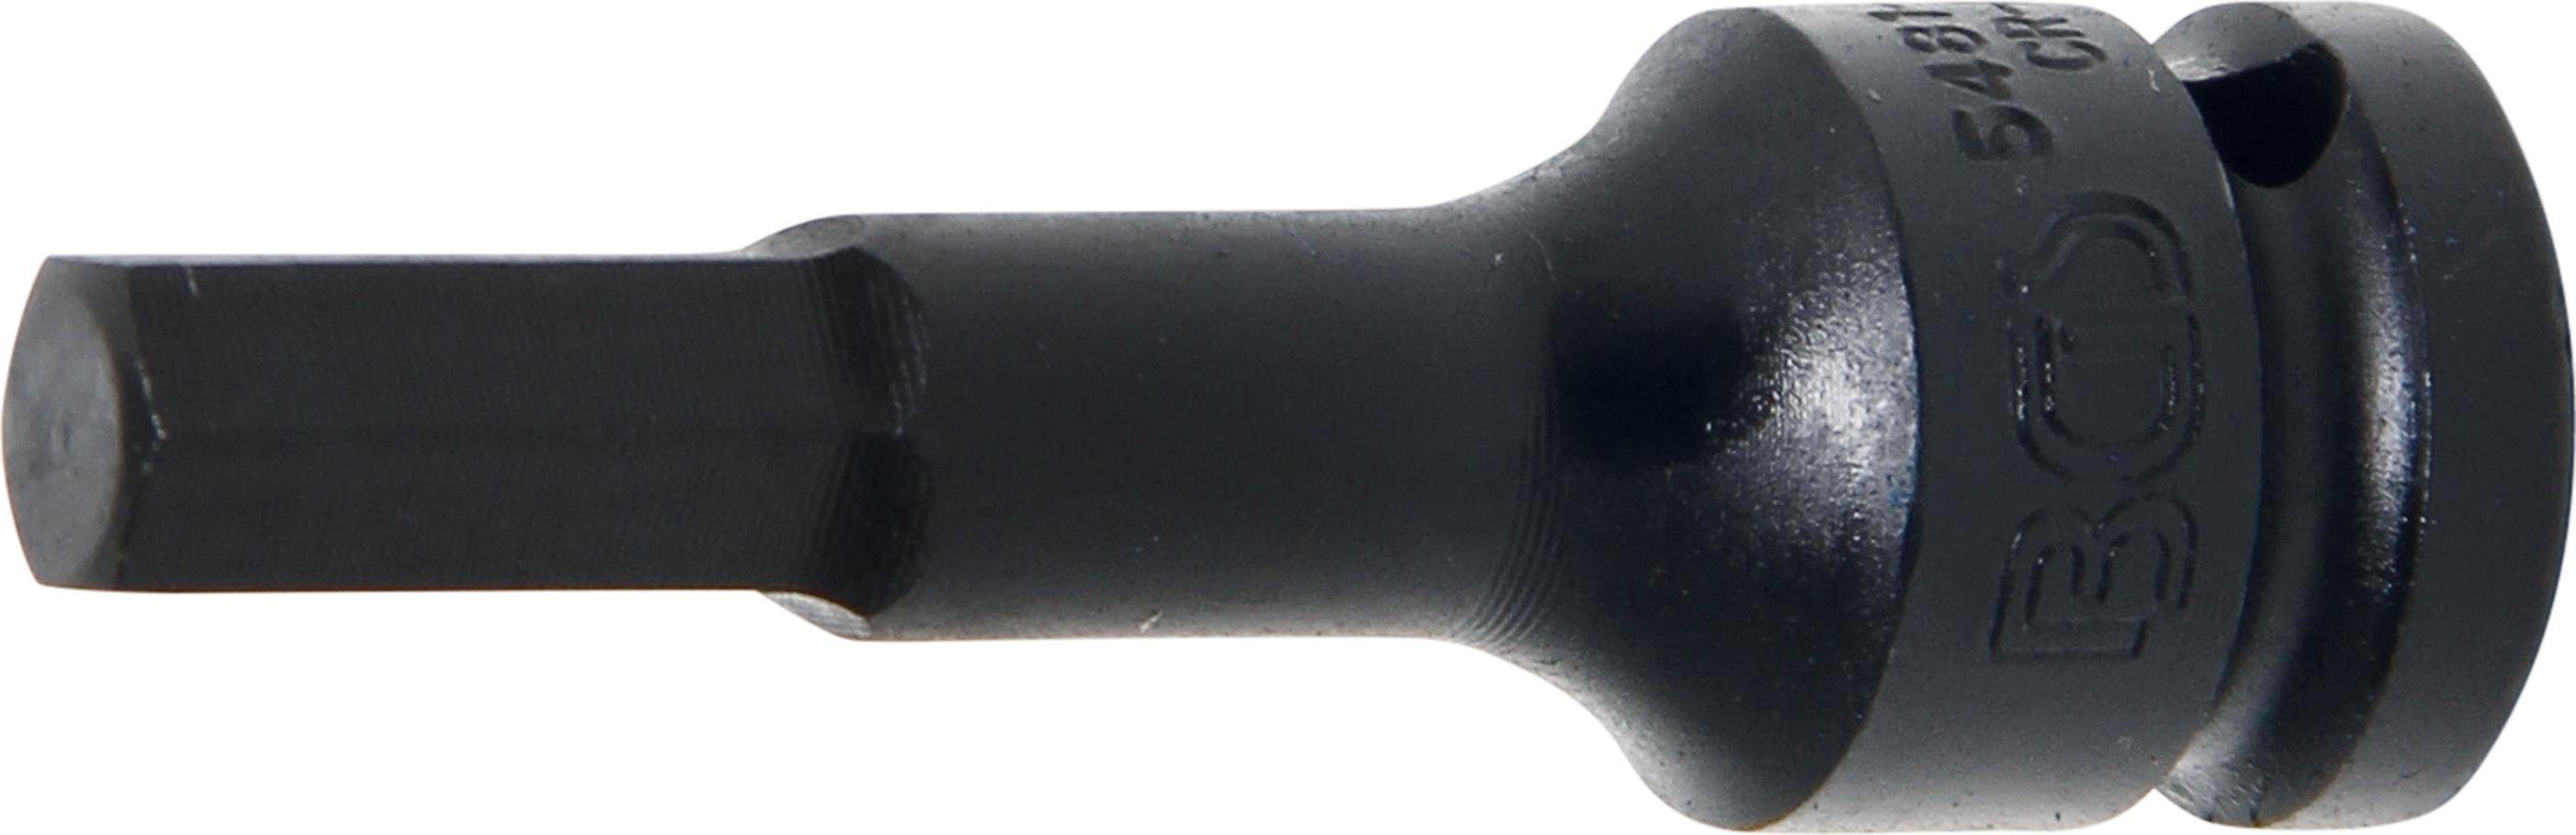 BGS technic Sechskant-Bit Kraft-Bit-Einsatz, Antrieb Innenvierkant 12,5 mm (1/2), Innensechskant 10 mm